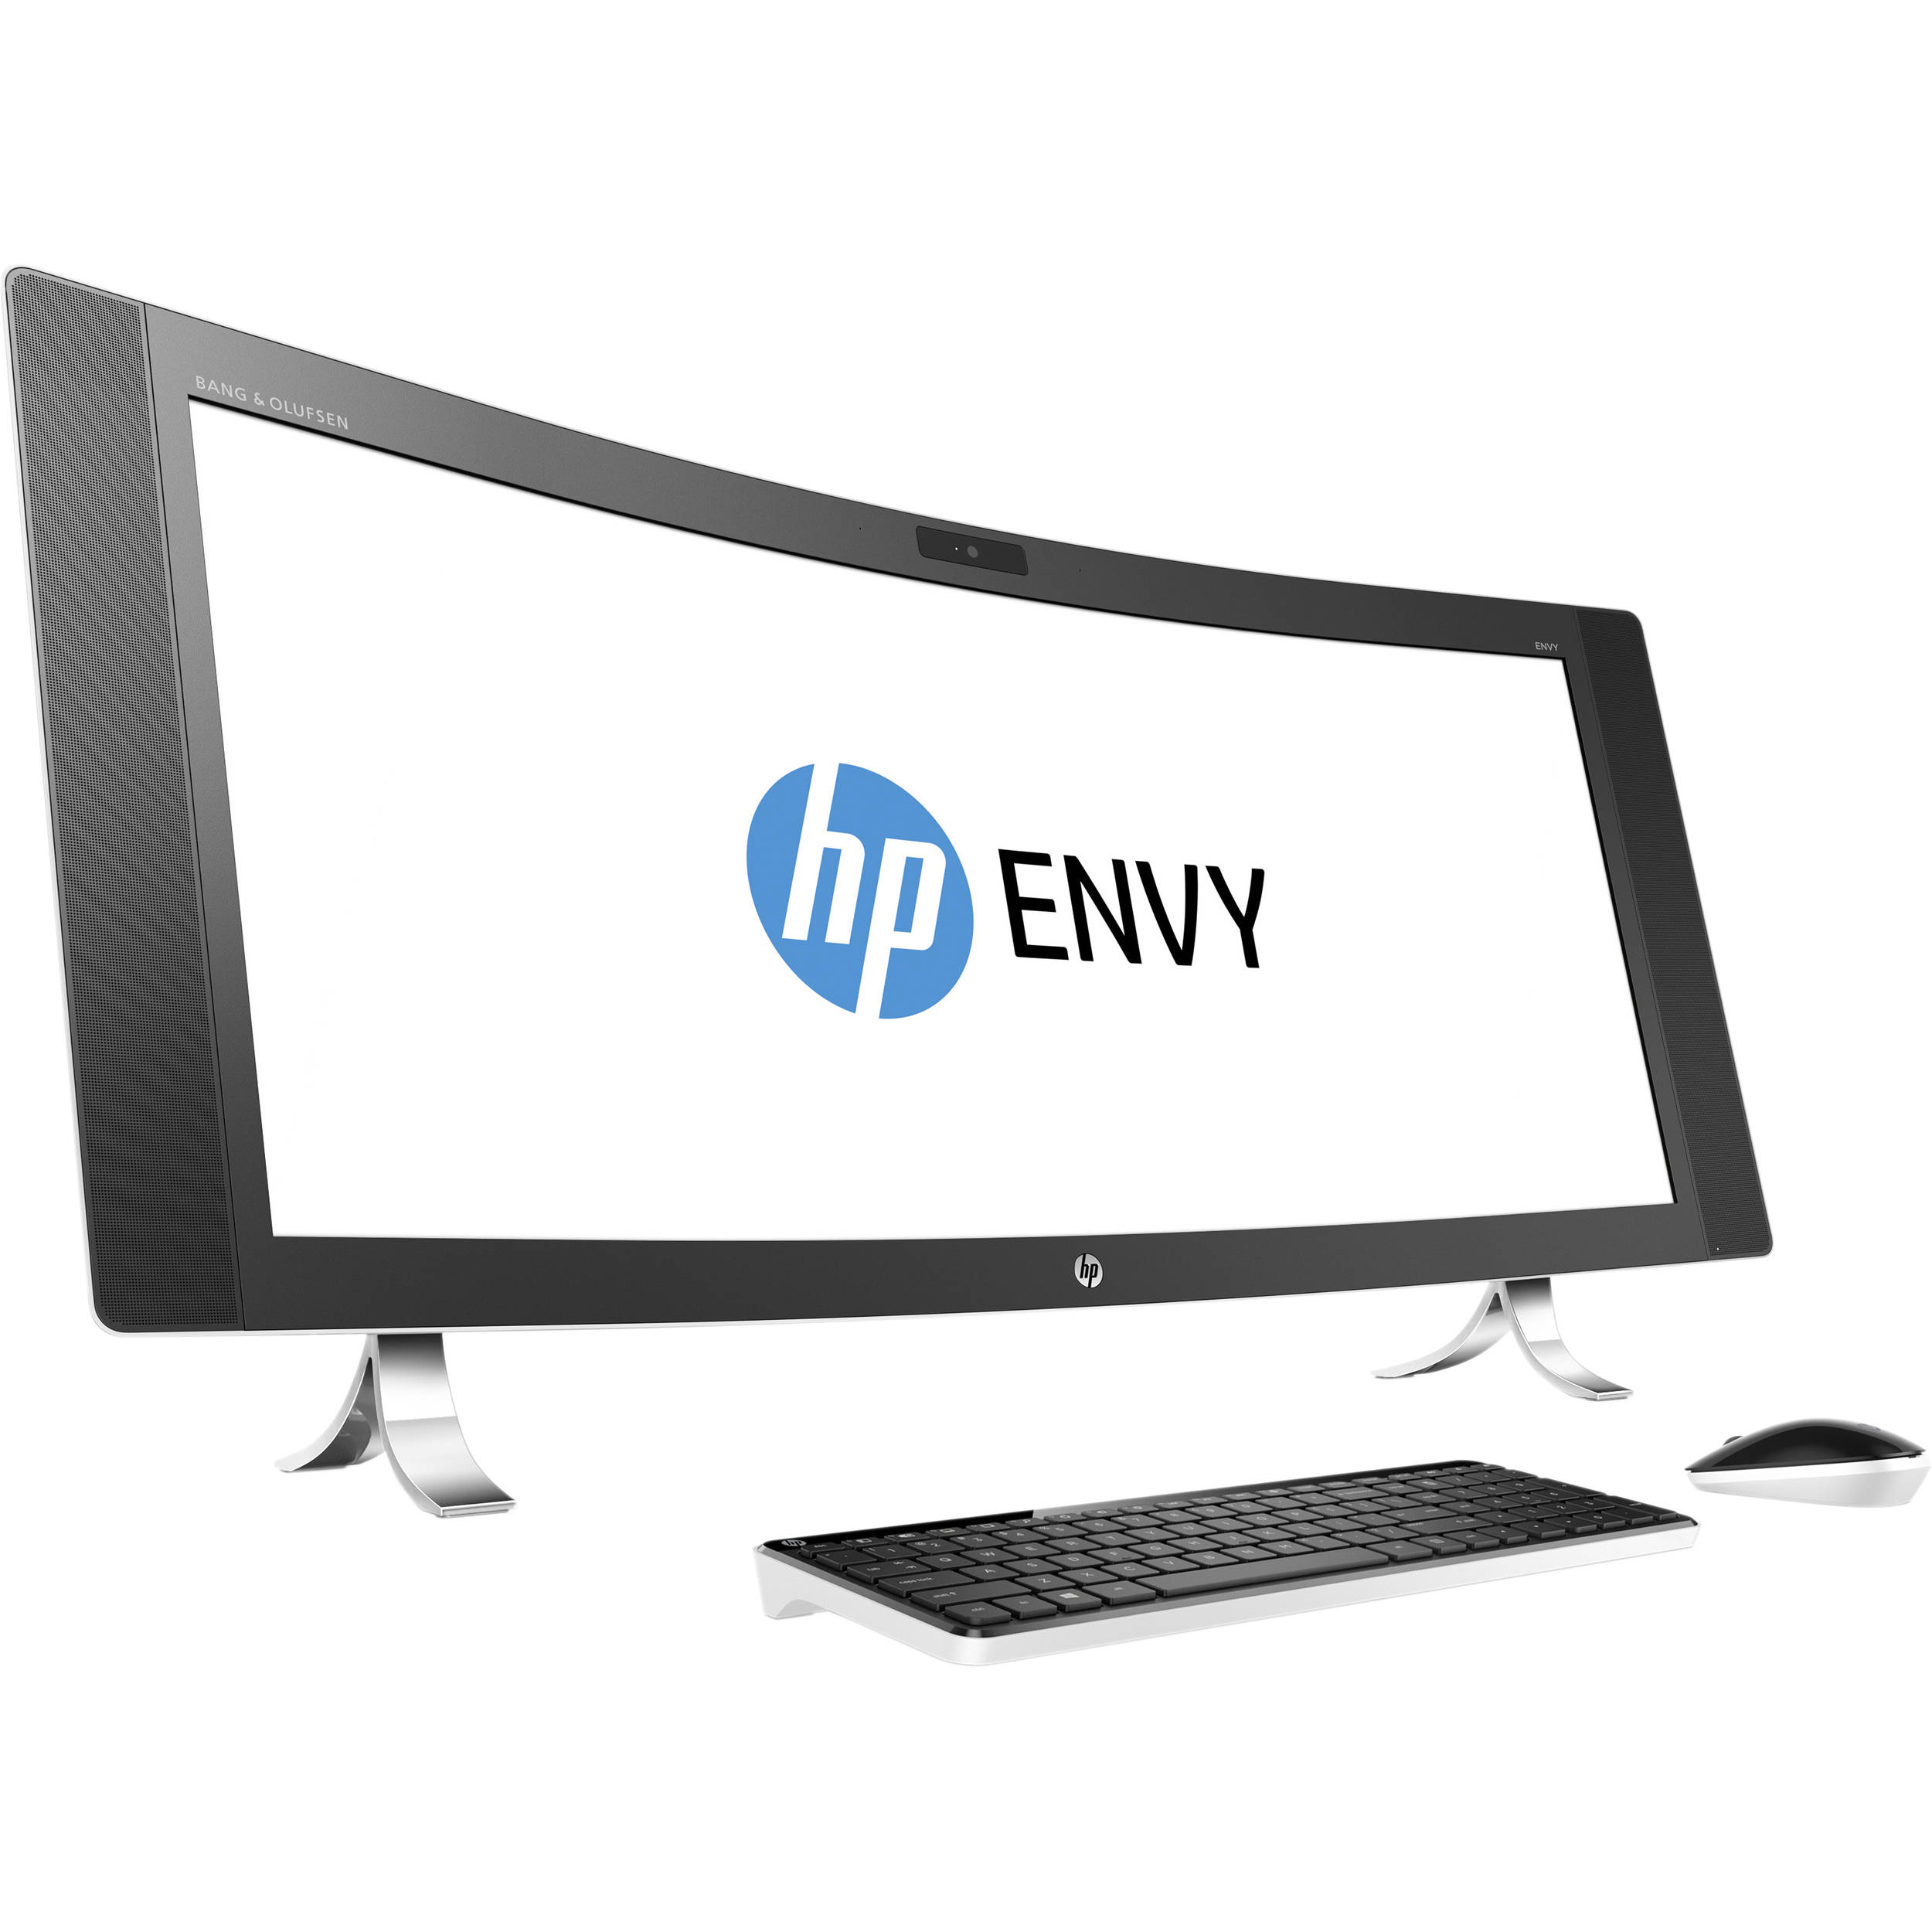 Hp Envy A010 All In One Desktop B H Photo